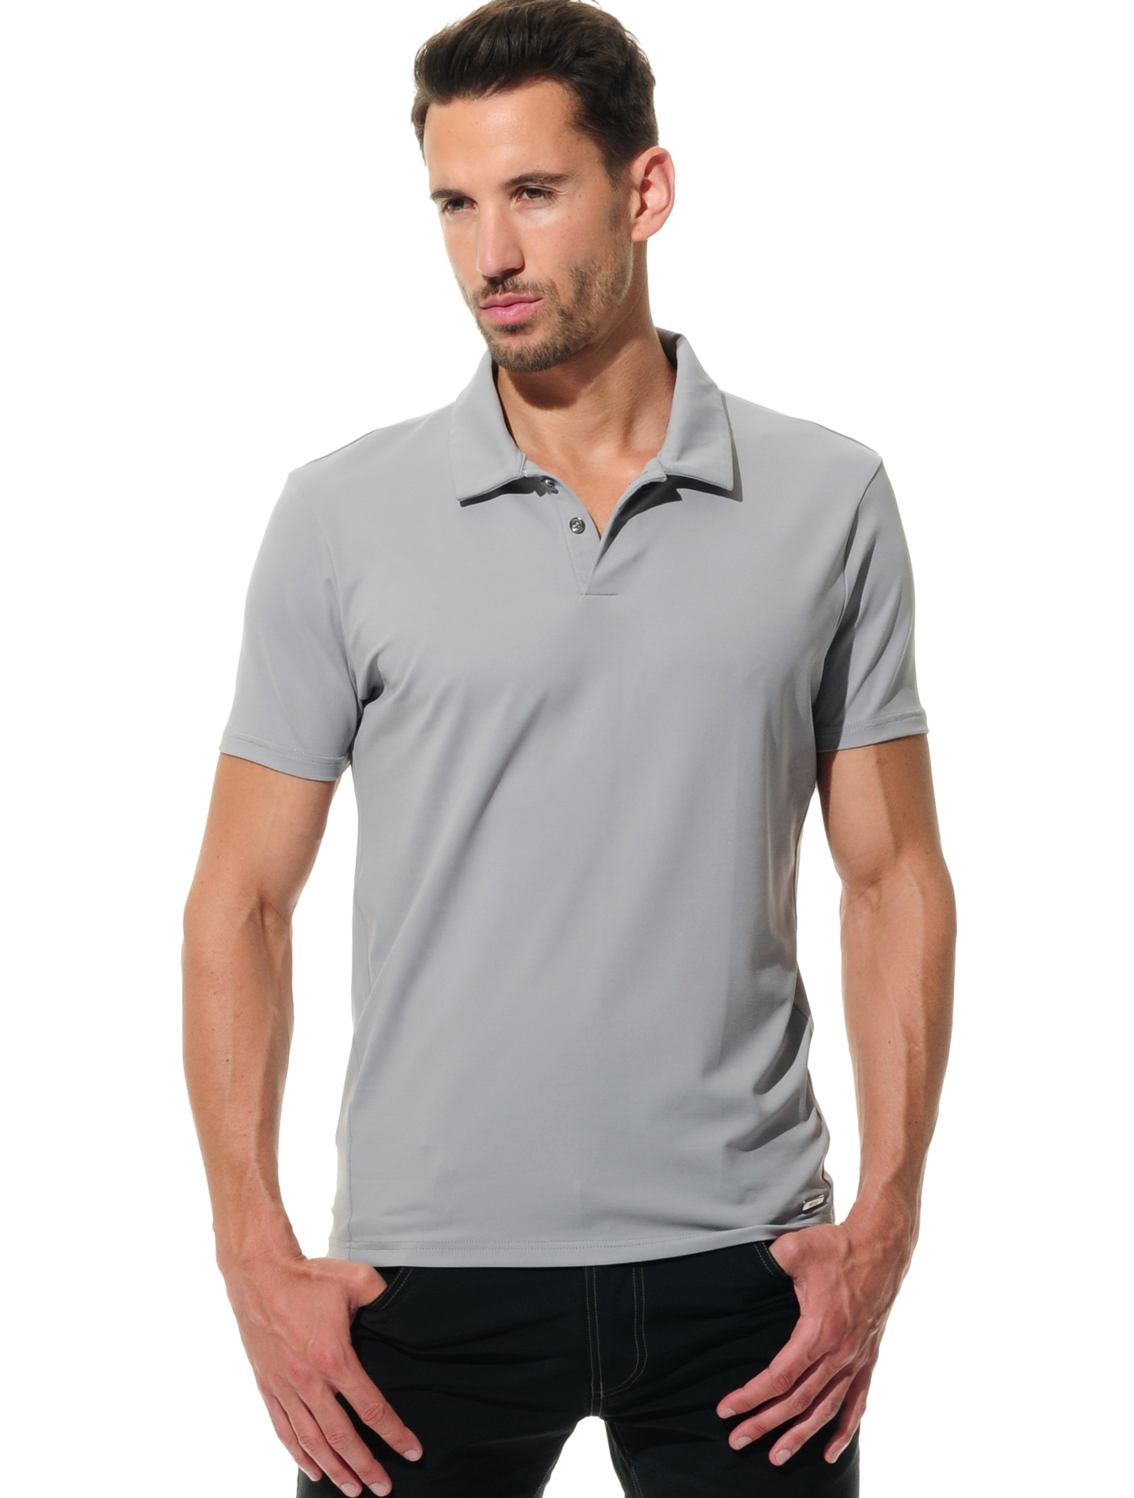 Golf Poloshirt grey